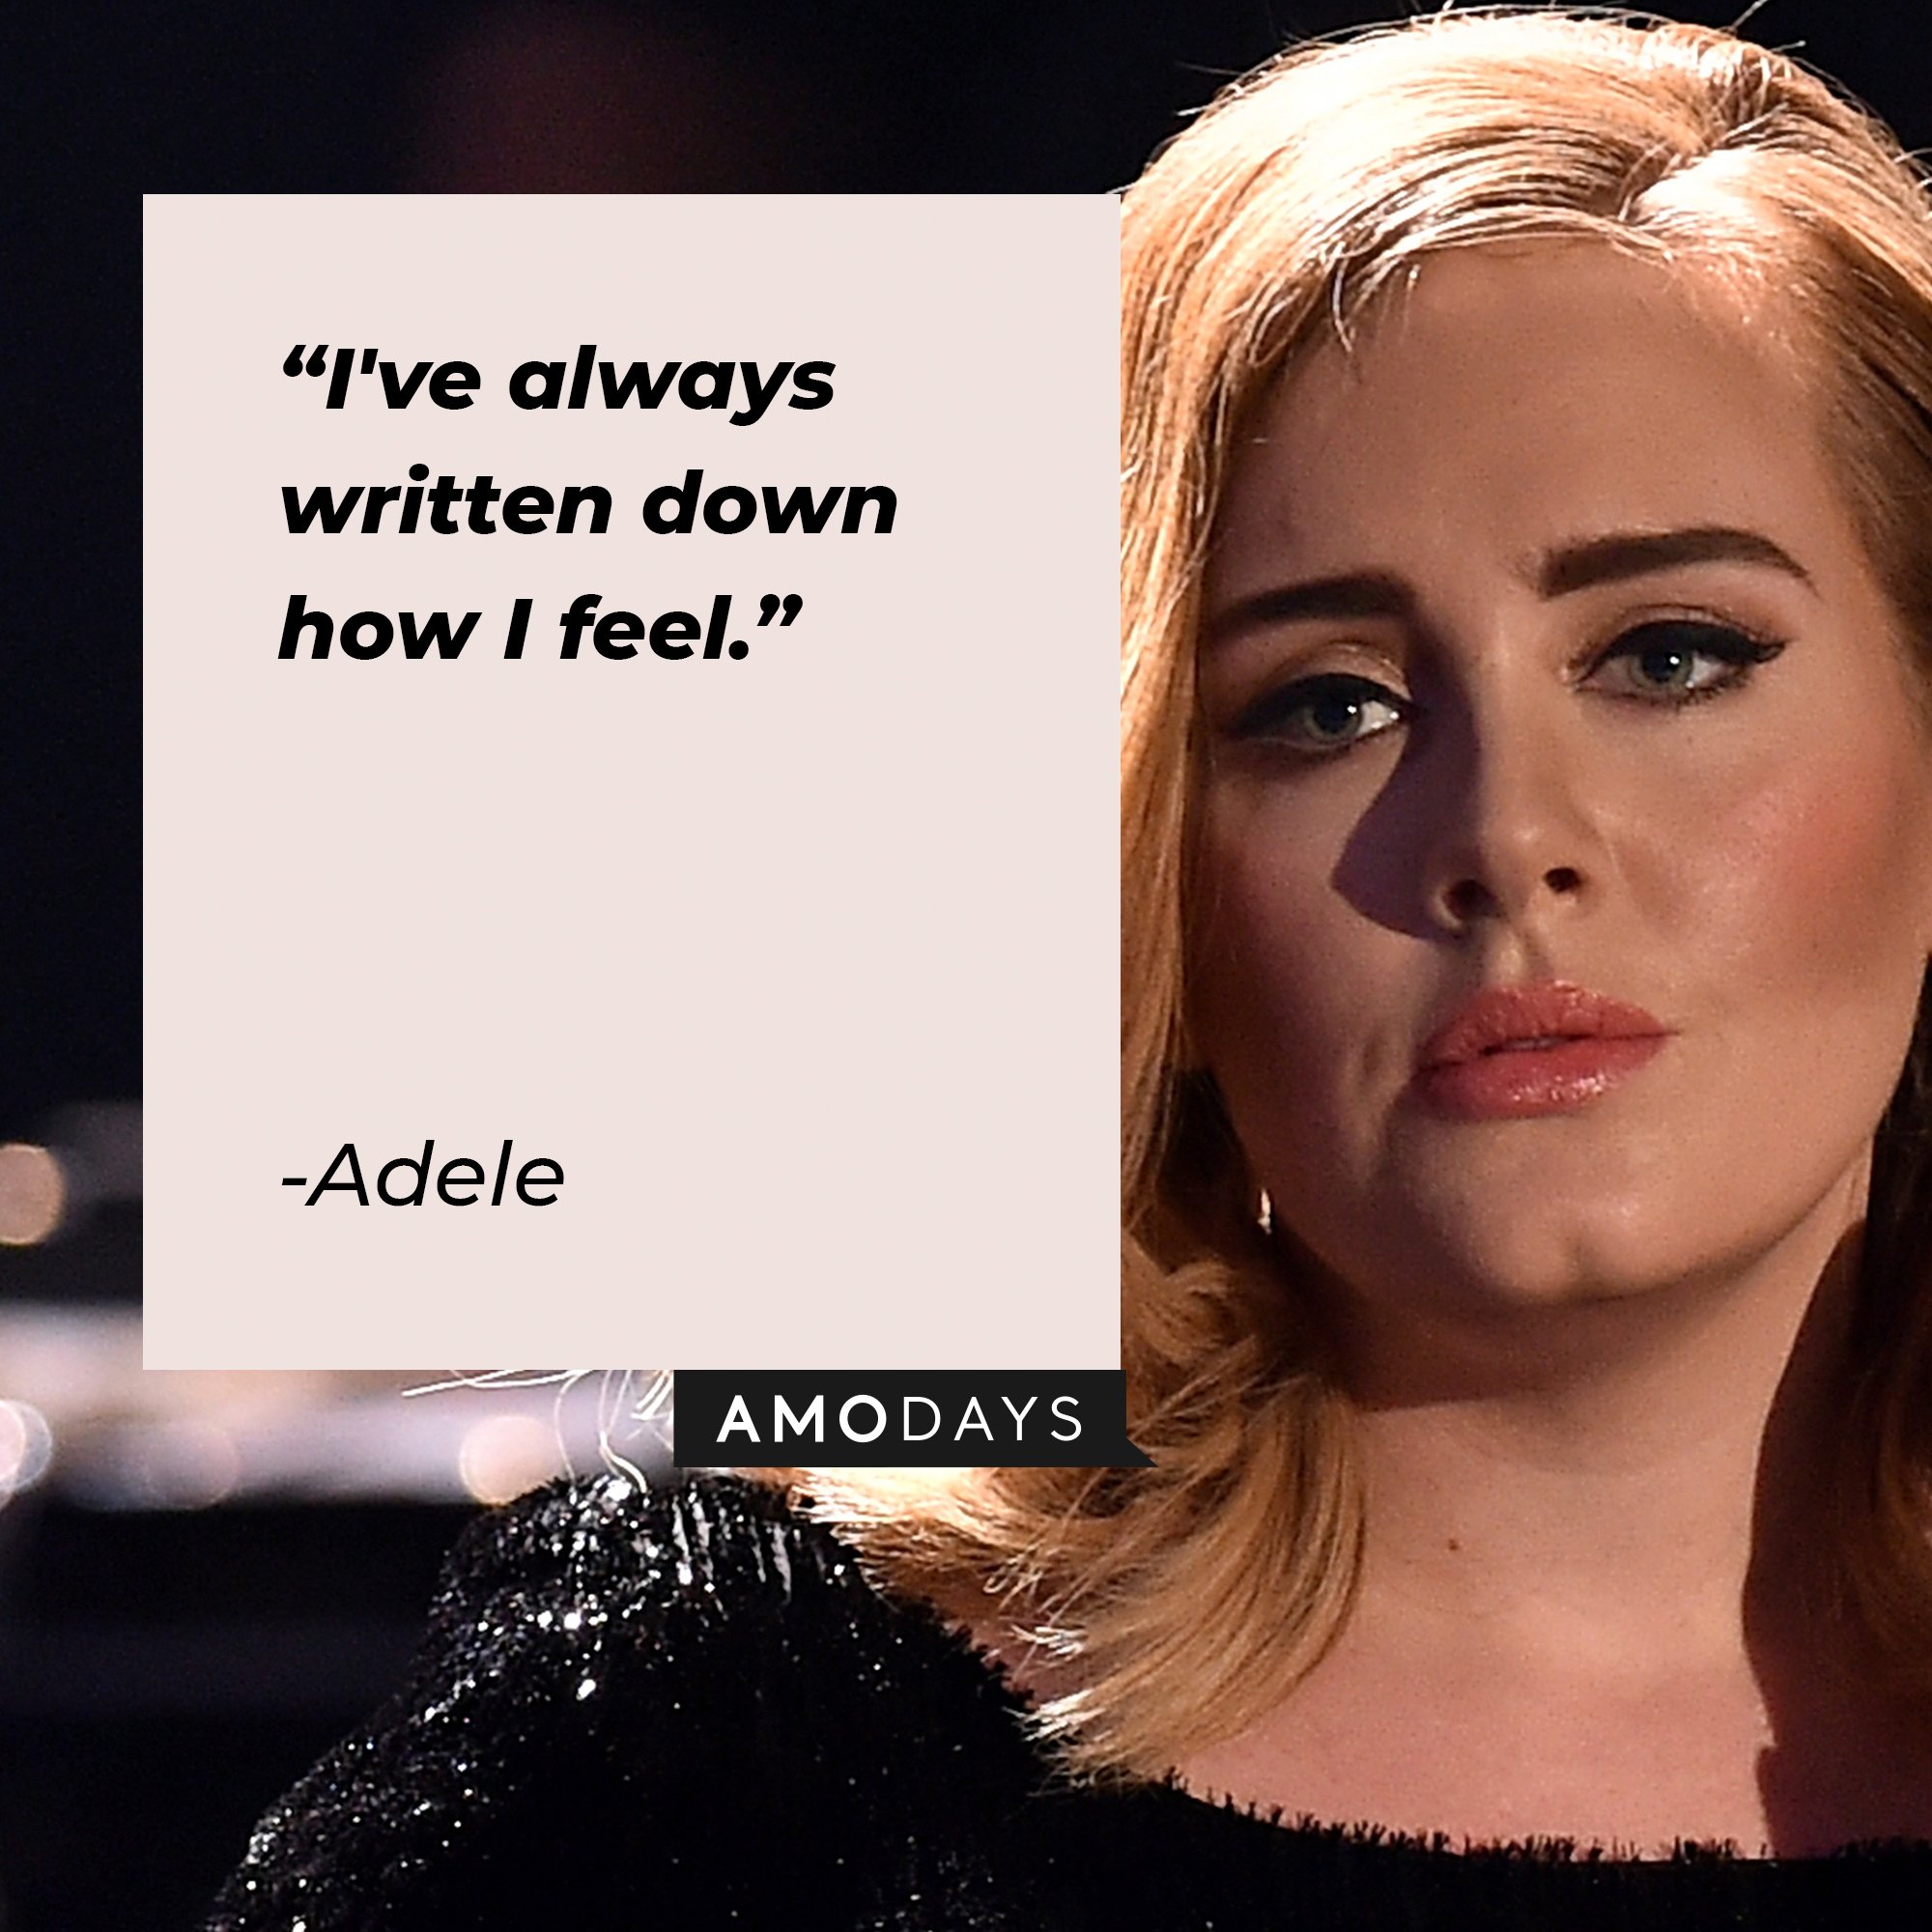 Adele’s quote: "I've always written down how I feel." | Image: AmoDays